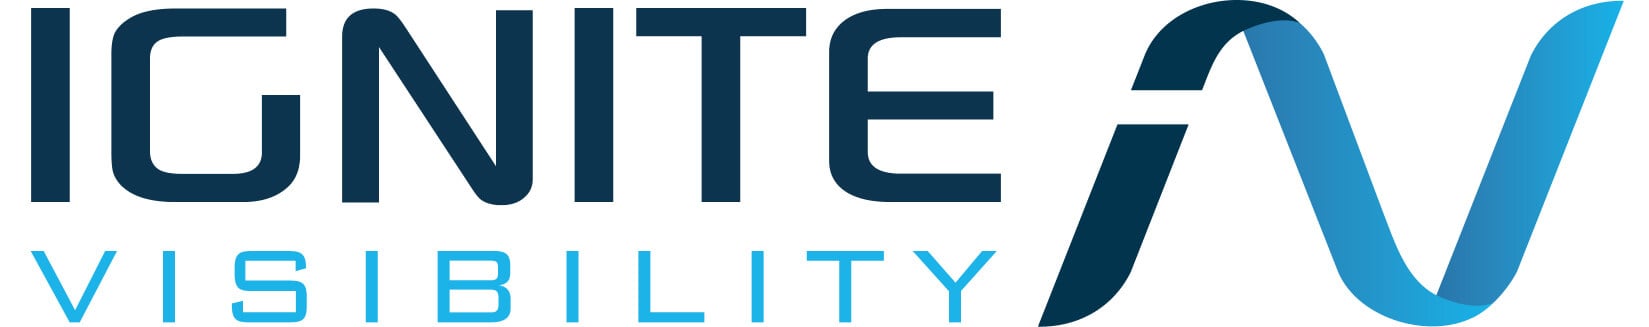 Best Dental SEO Company Logo: Ignite Visibility